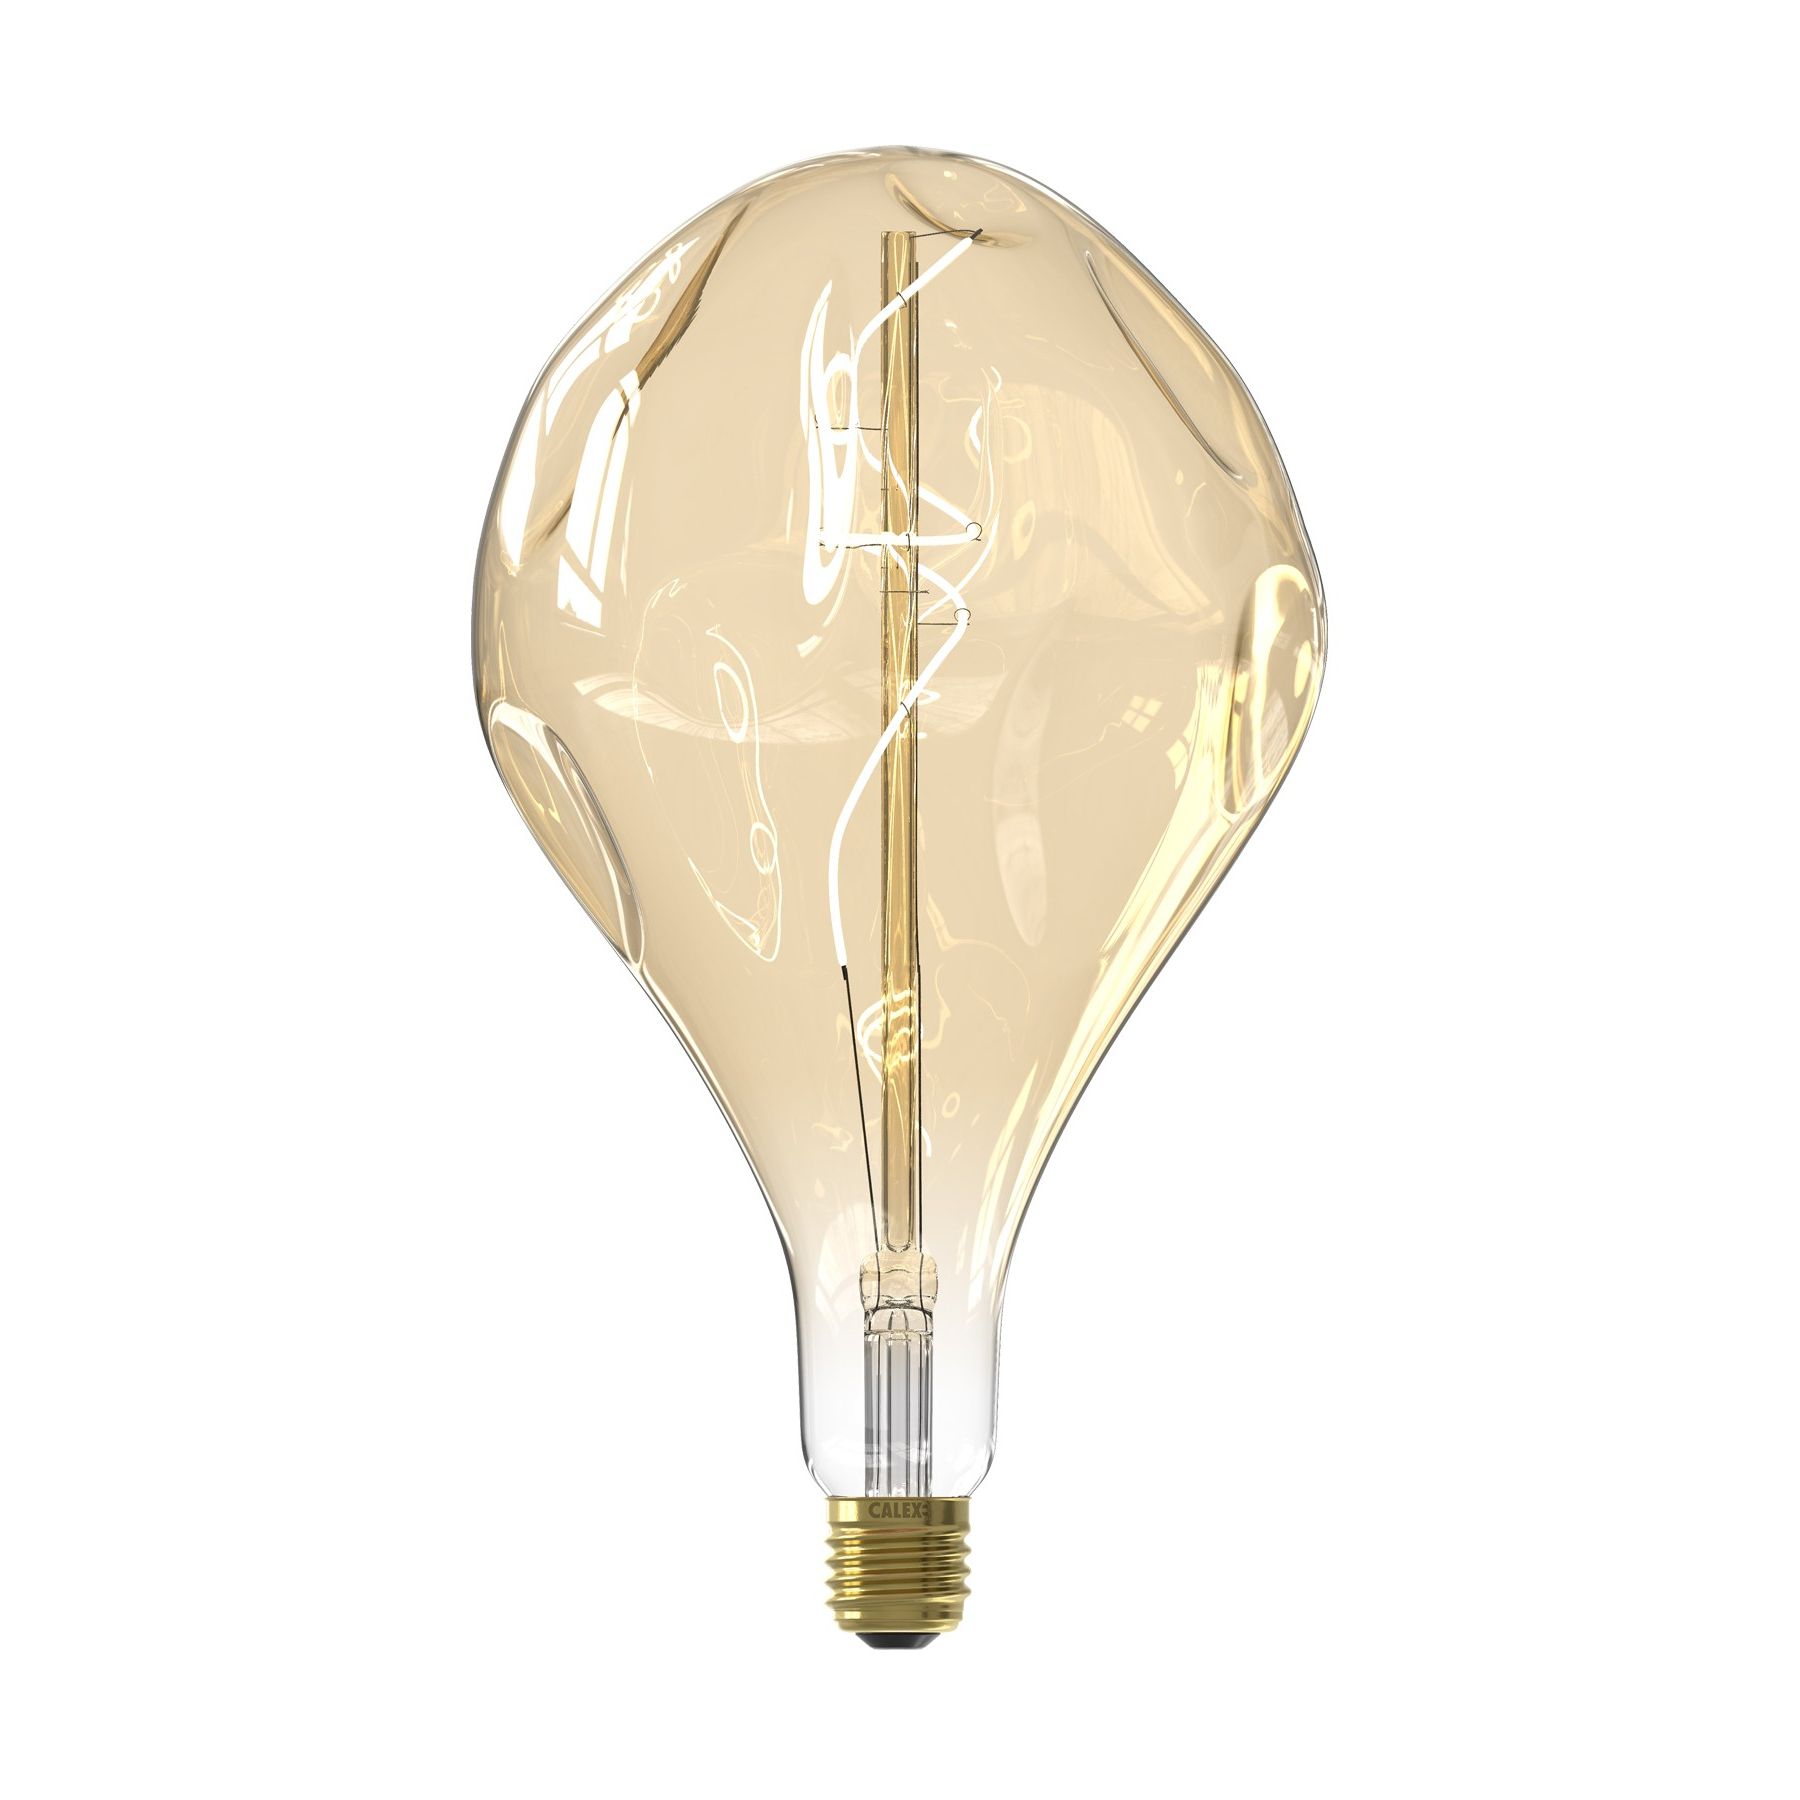 Bully agitatie spontaan Calex Smart XXL LED lamp - Ø 16,5 x 28 cm - E27 - 6W - dimfunctie via app -  2000K - goud | Lichtkoning